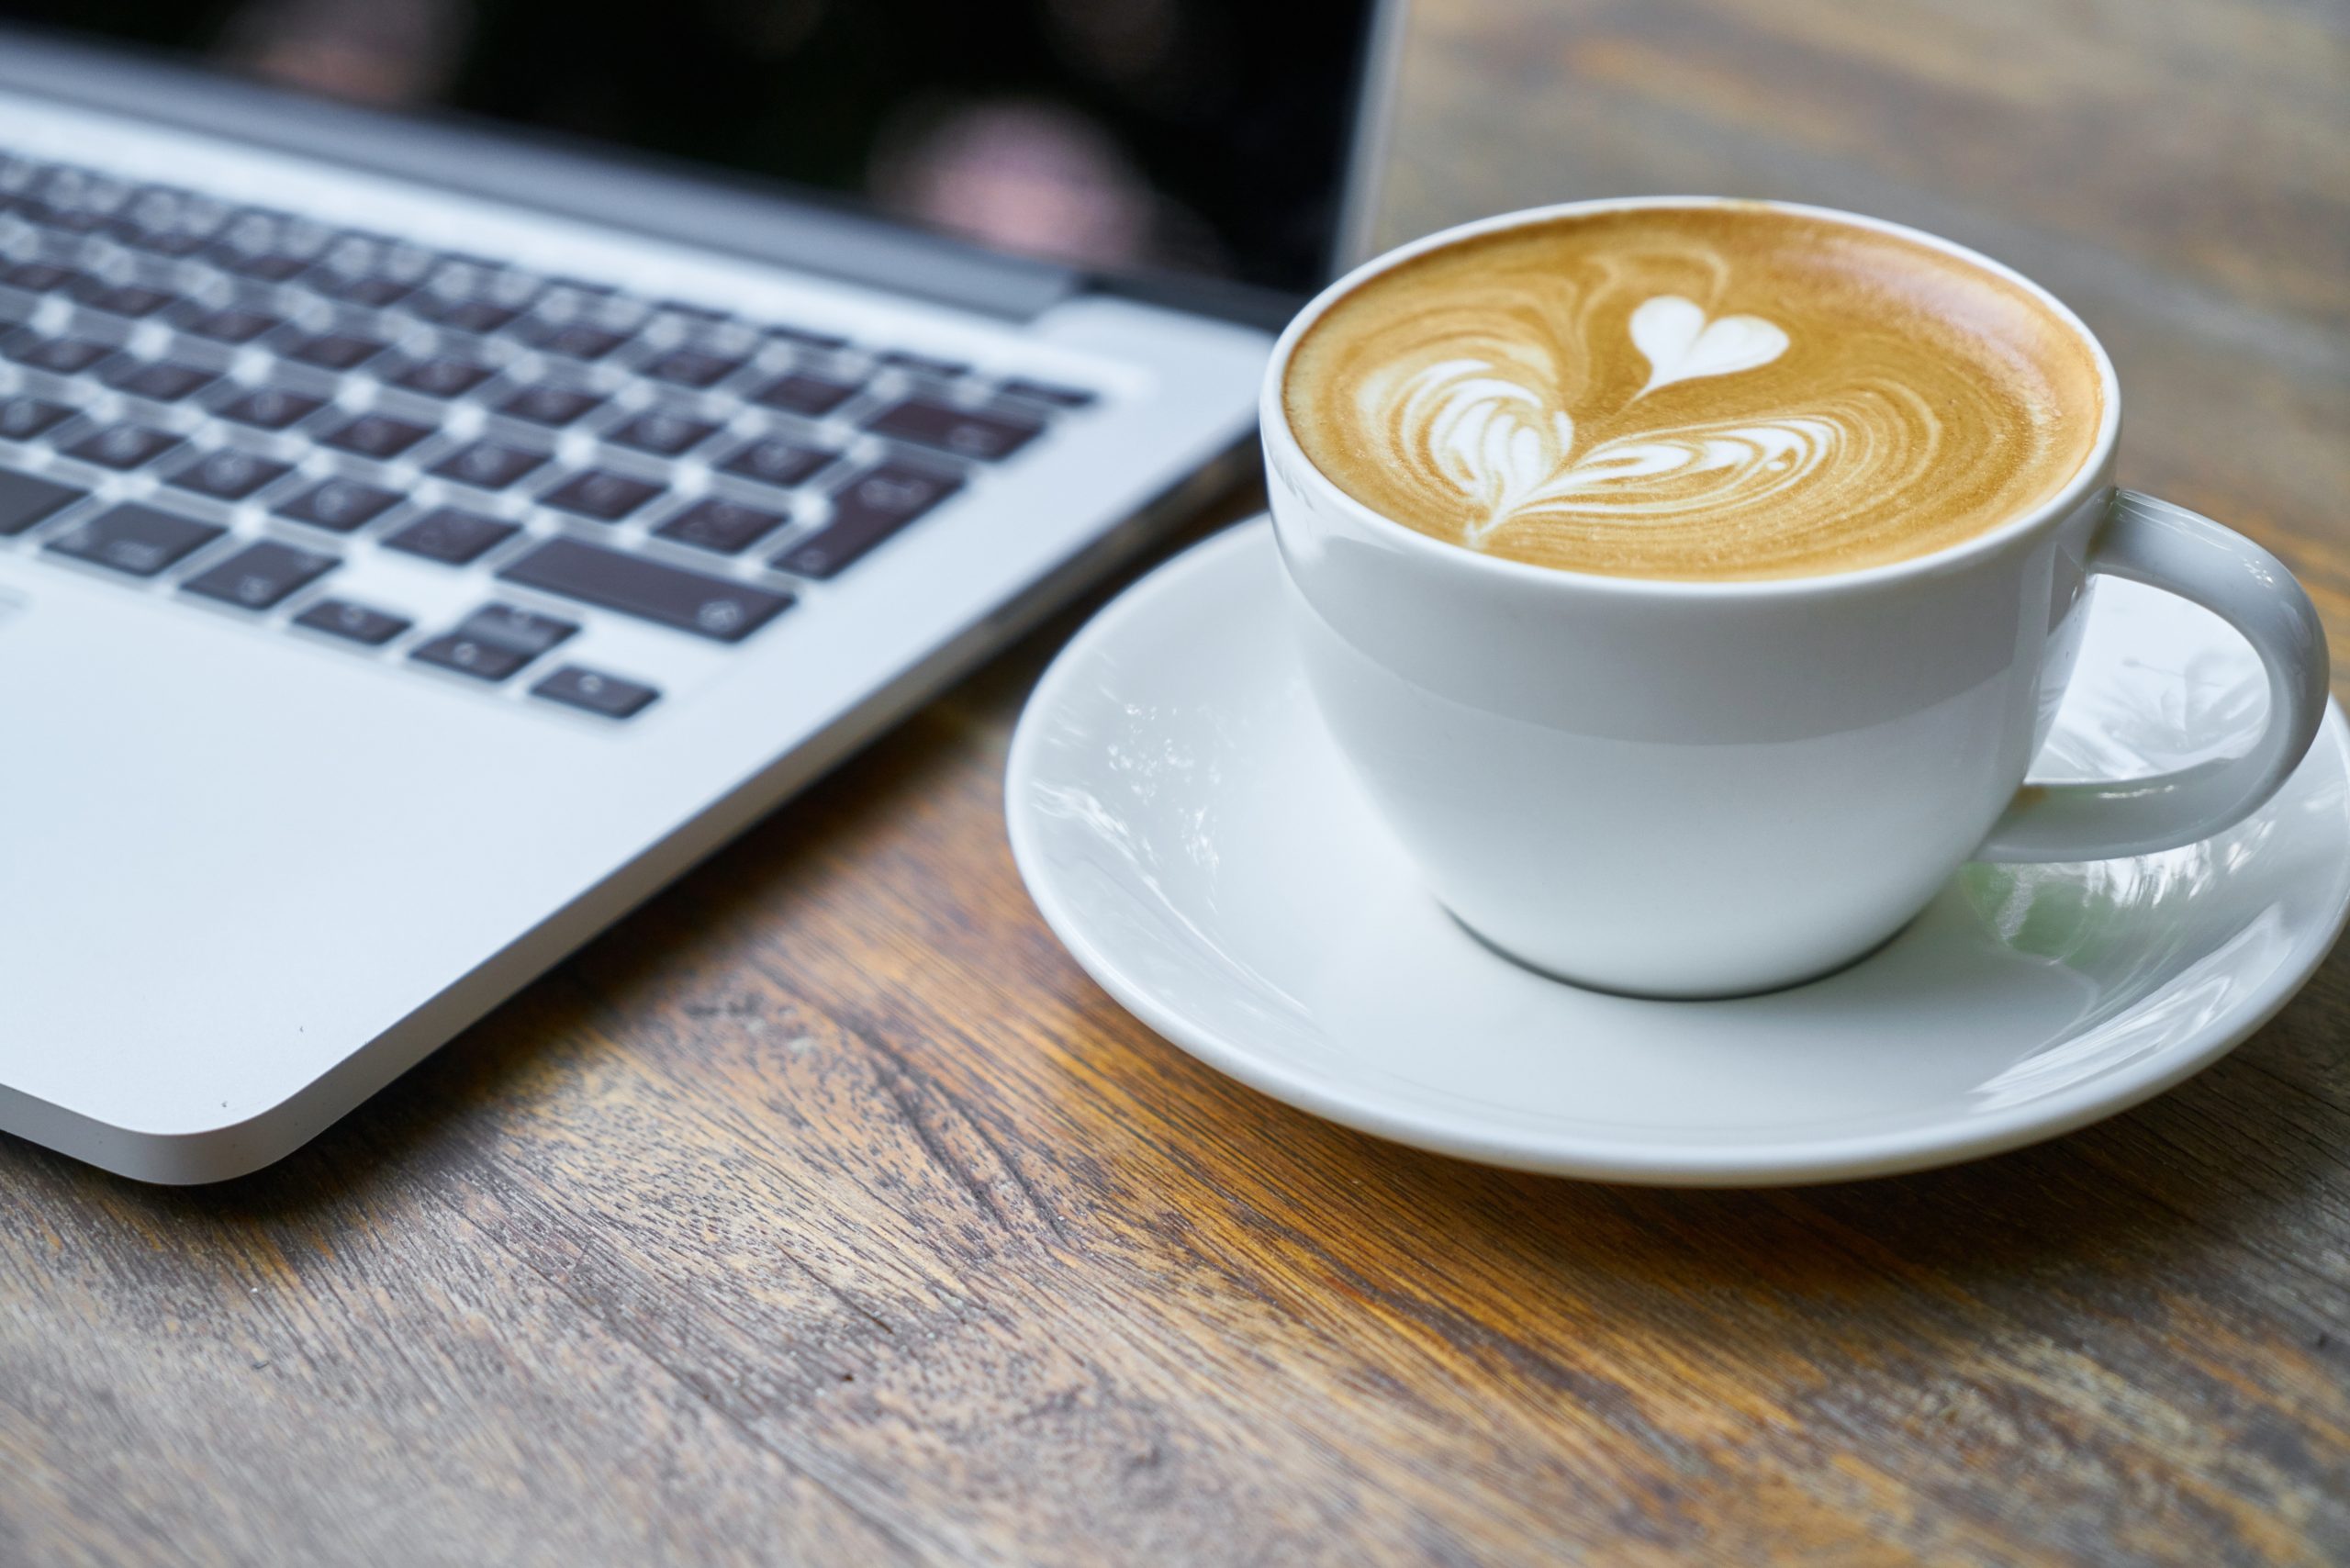 Coffee near the laptop on desk